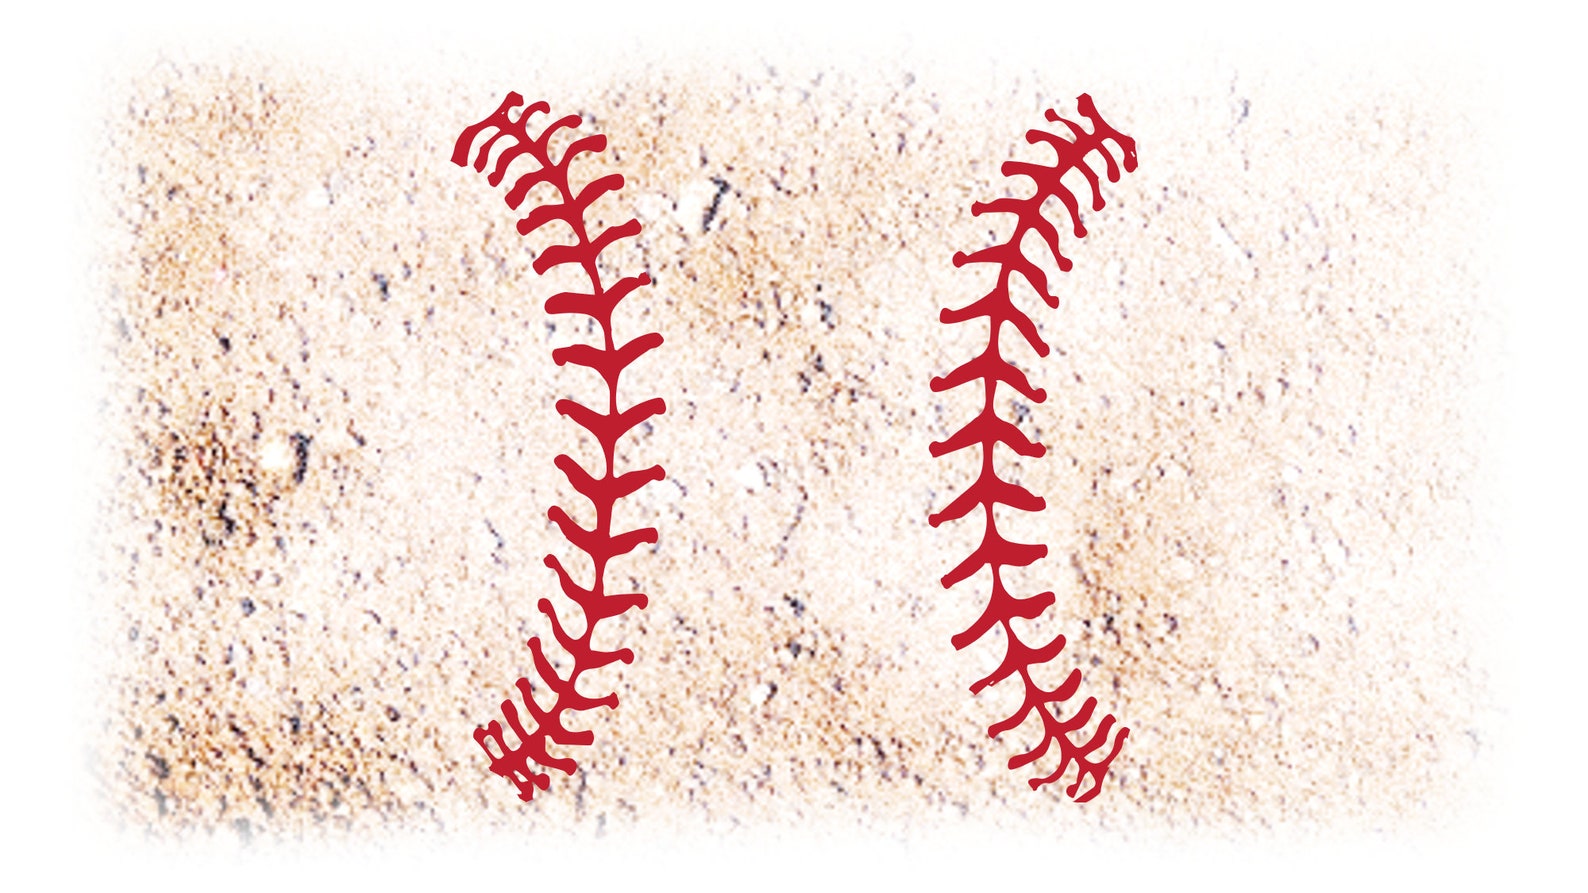 Large Softball or Baseball Ball Thread Stitches / Stitching - Make Into Any...